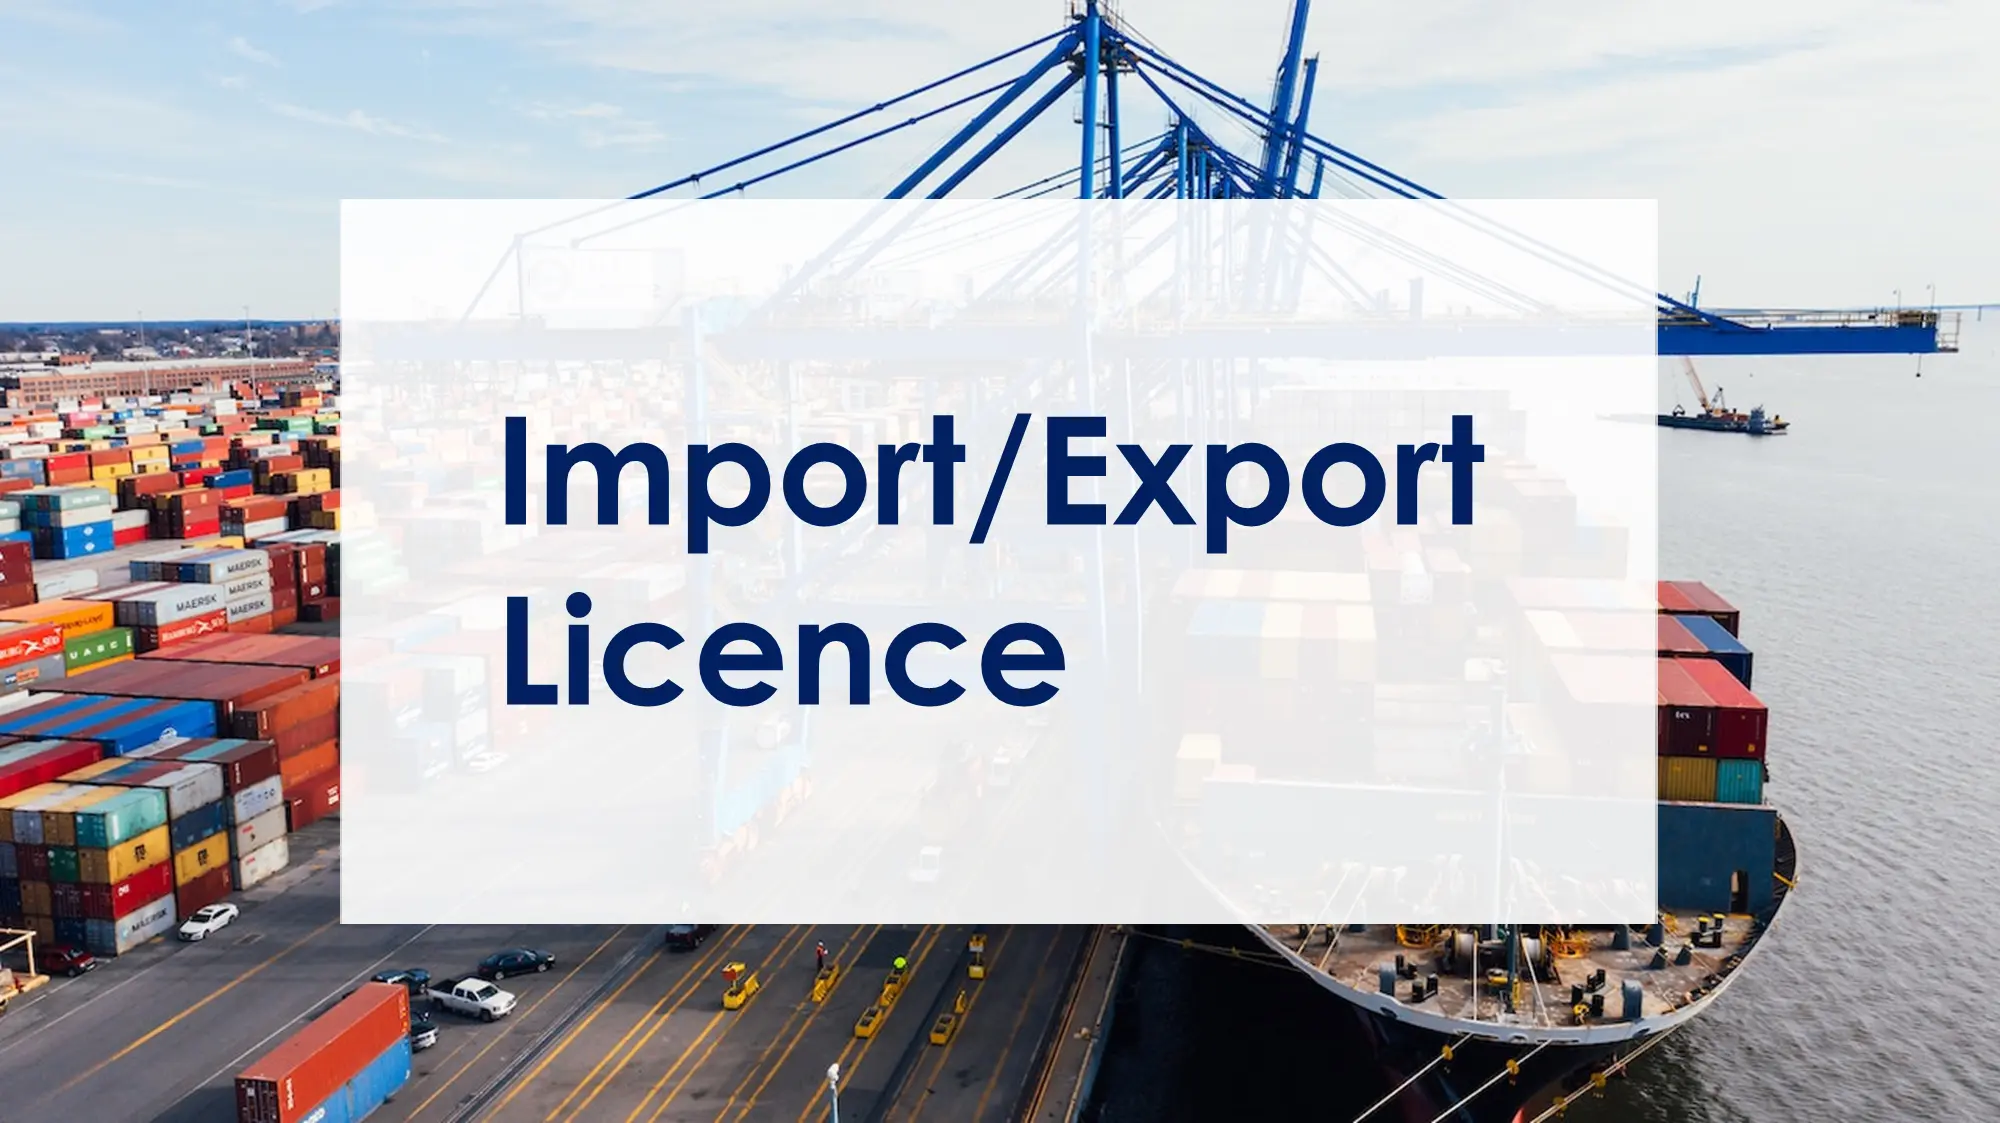 BIS License for Importer/Exporter